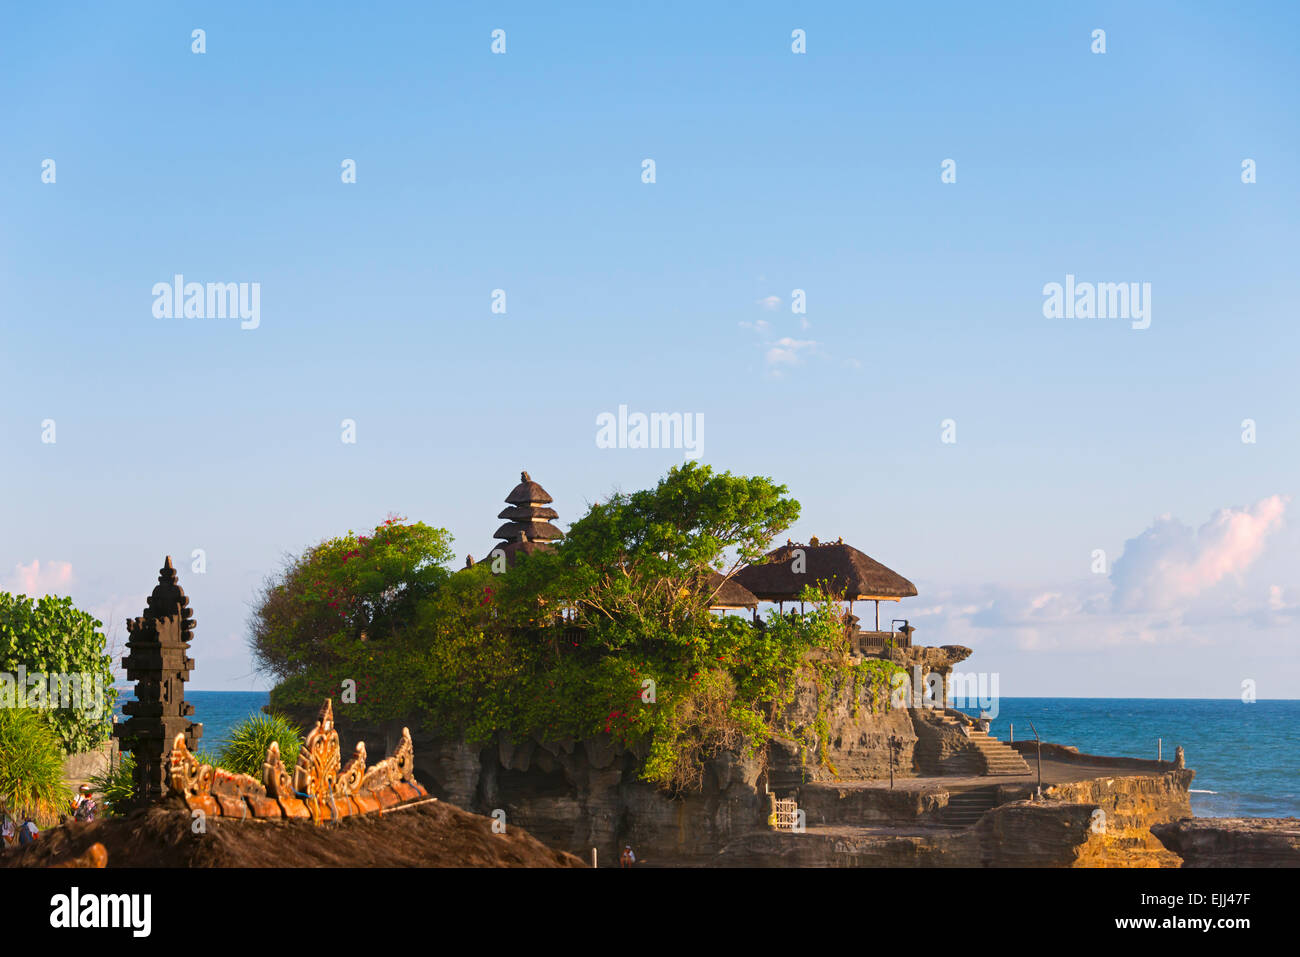 Tanah Lot. Bali island, Indonesia Stock Photo